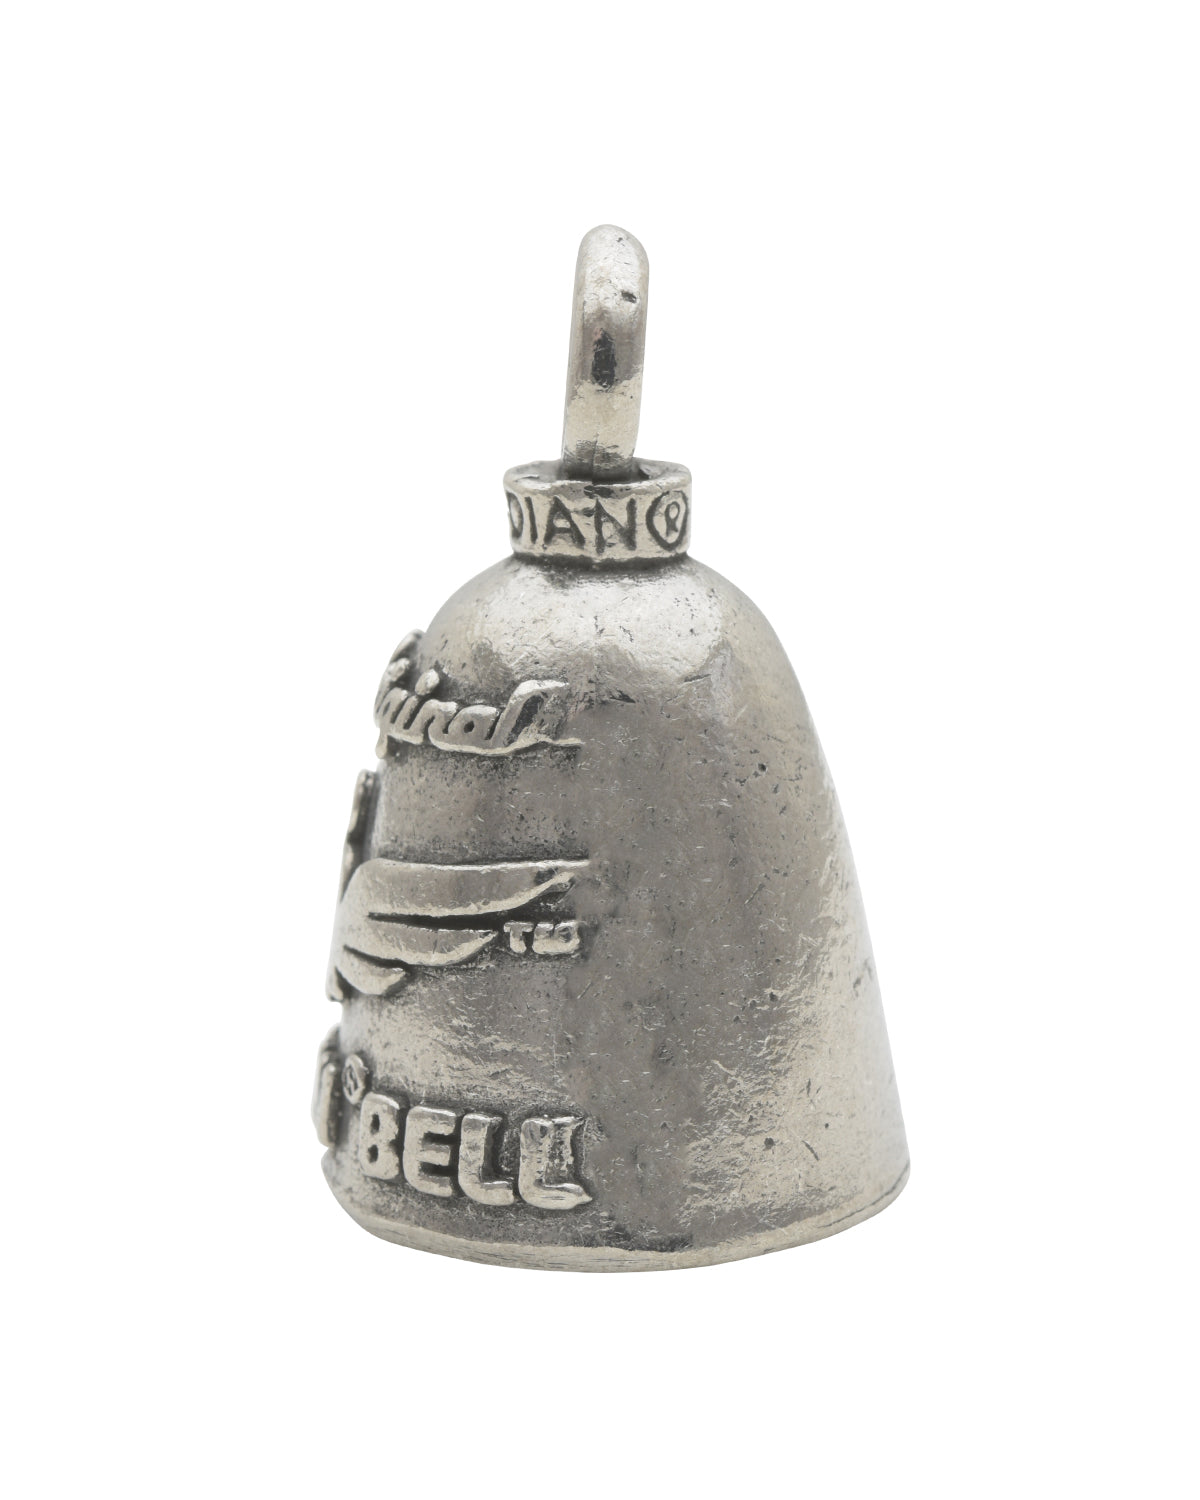 The Original Guardian Bell